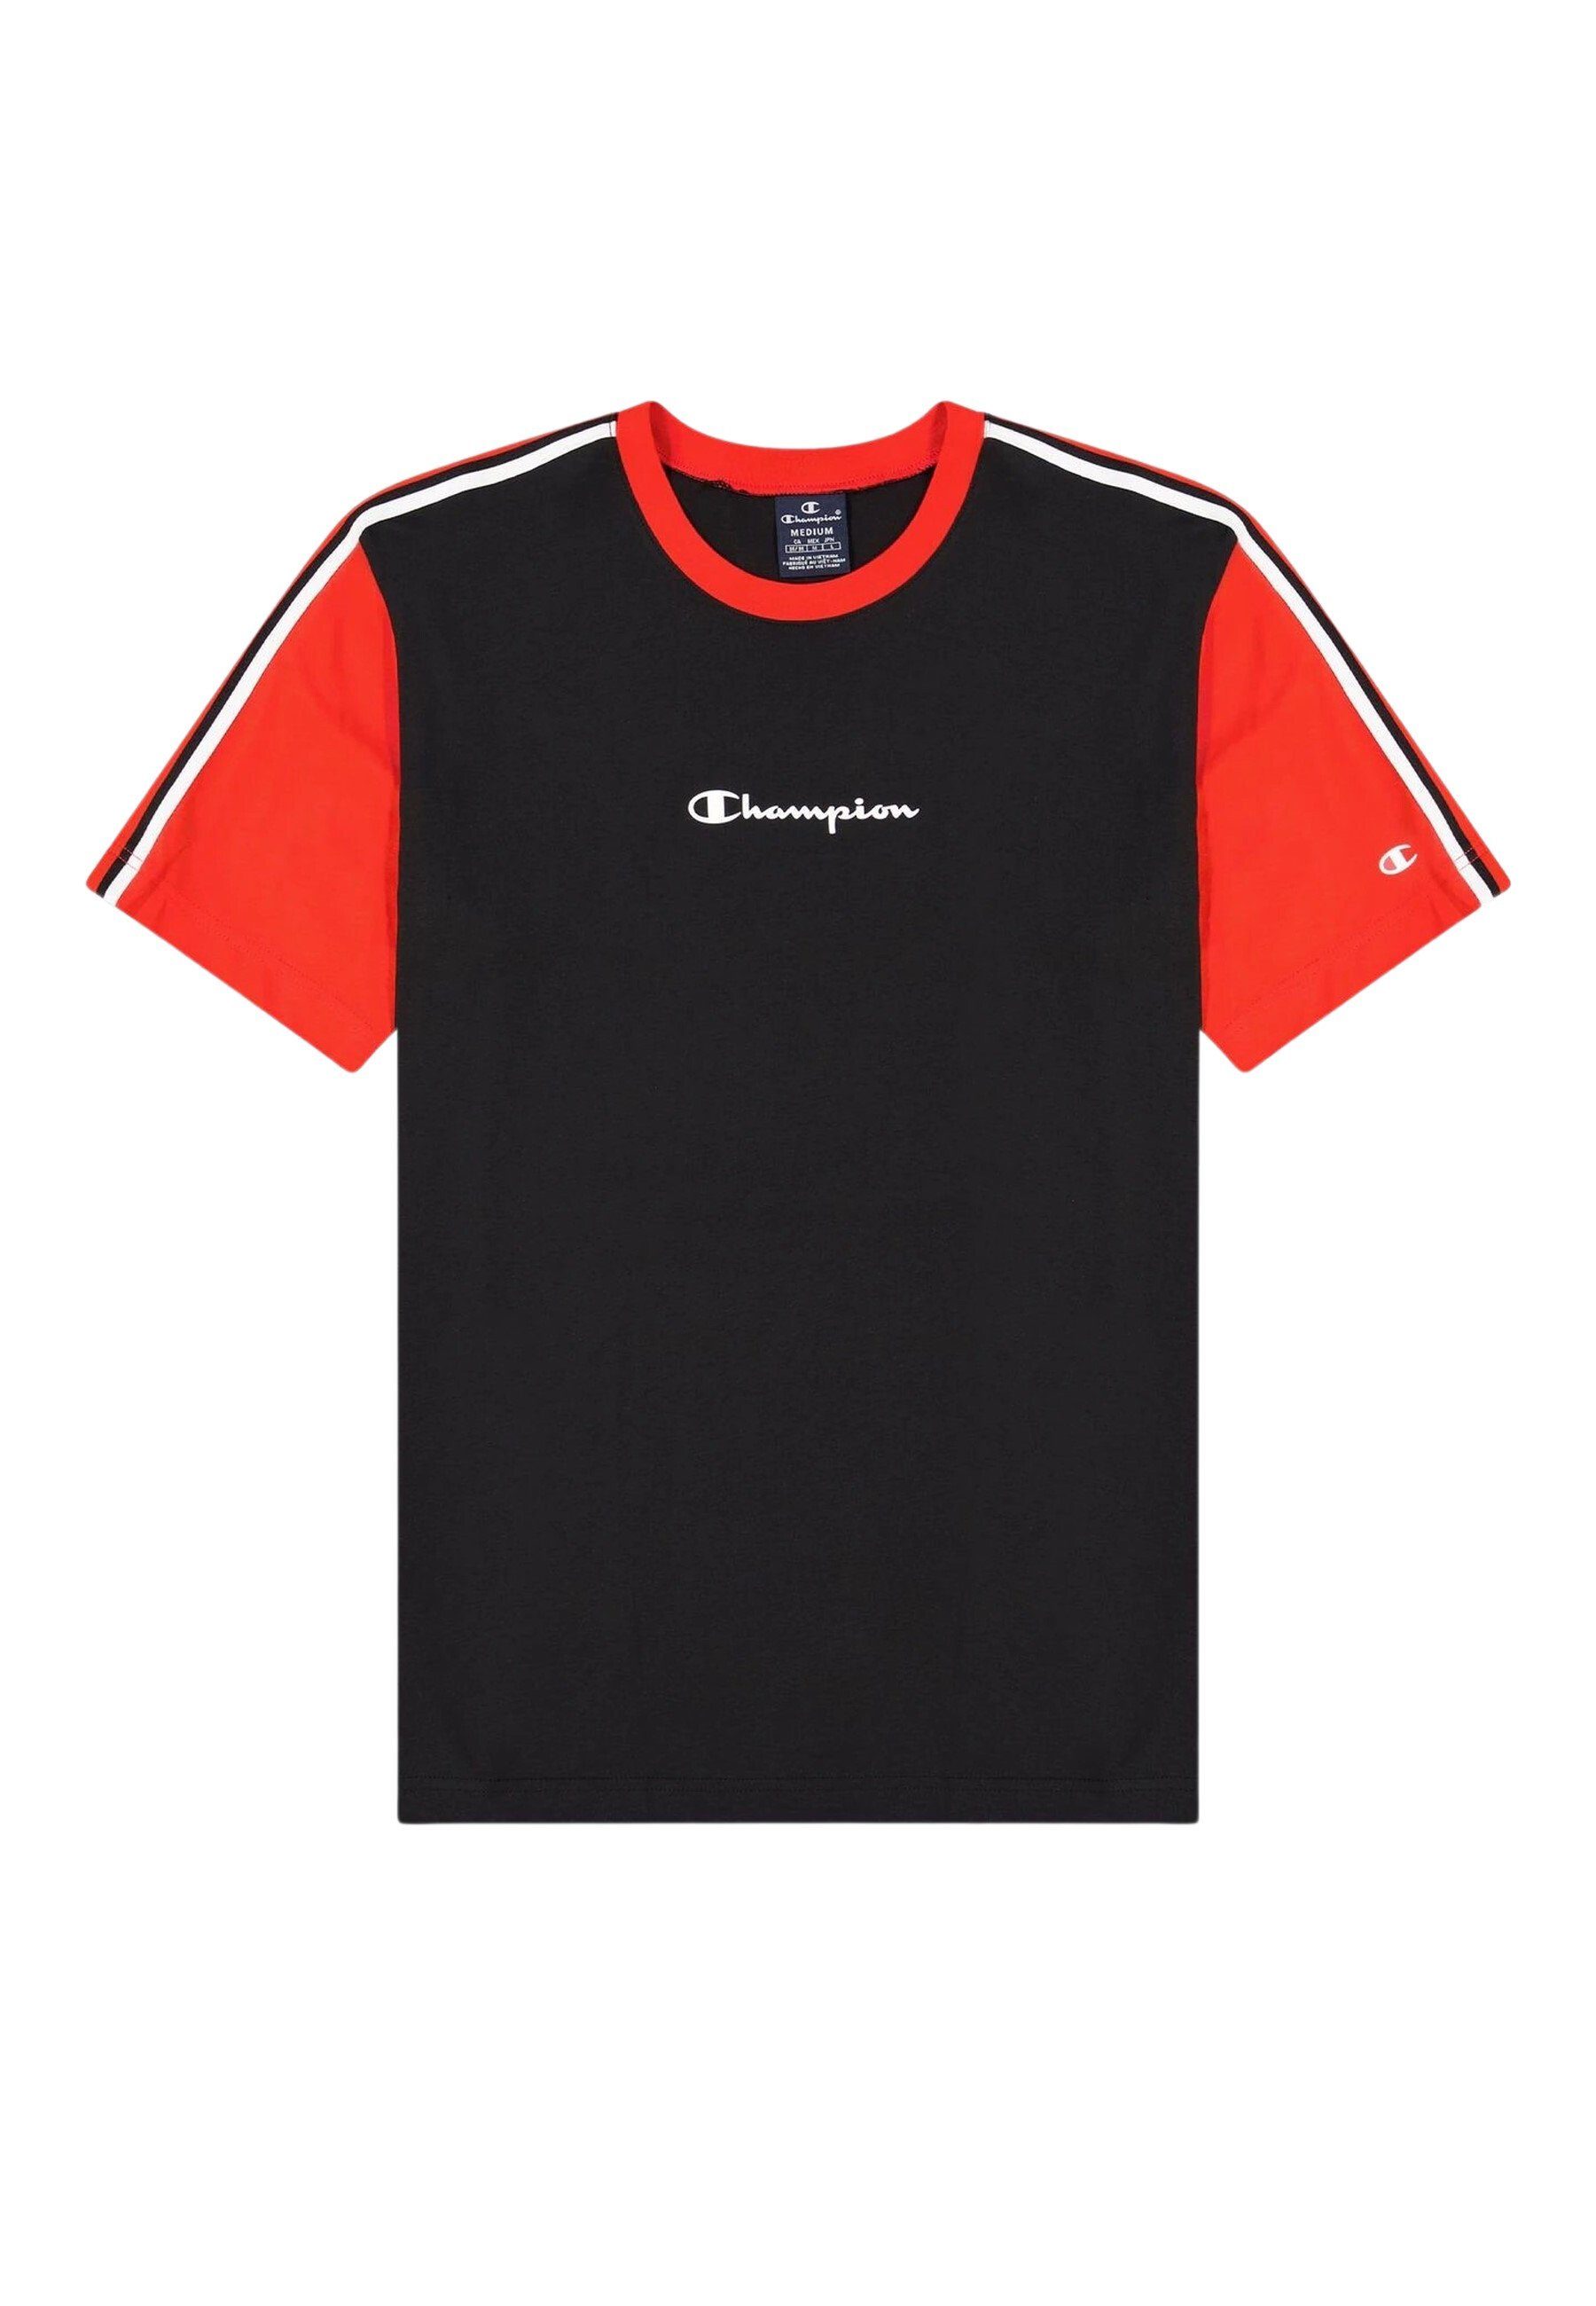 Champion T-Shirt Shirt Rundhals-T-Shirt mit Jacquardband in Comfort schwarz